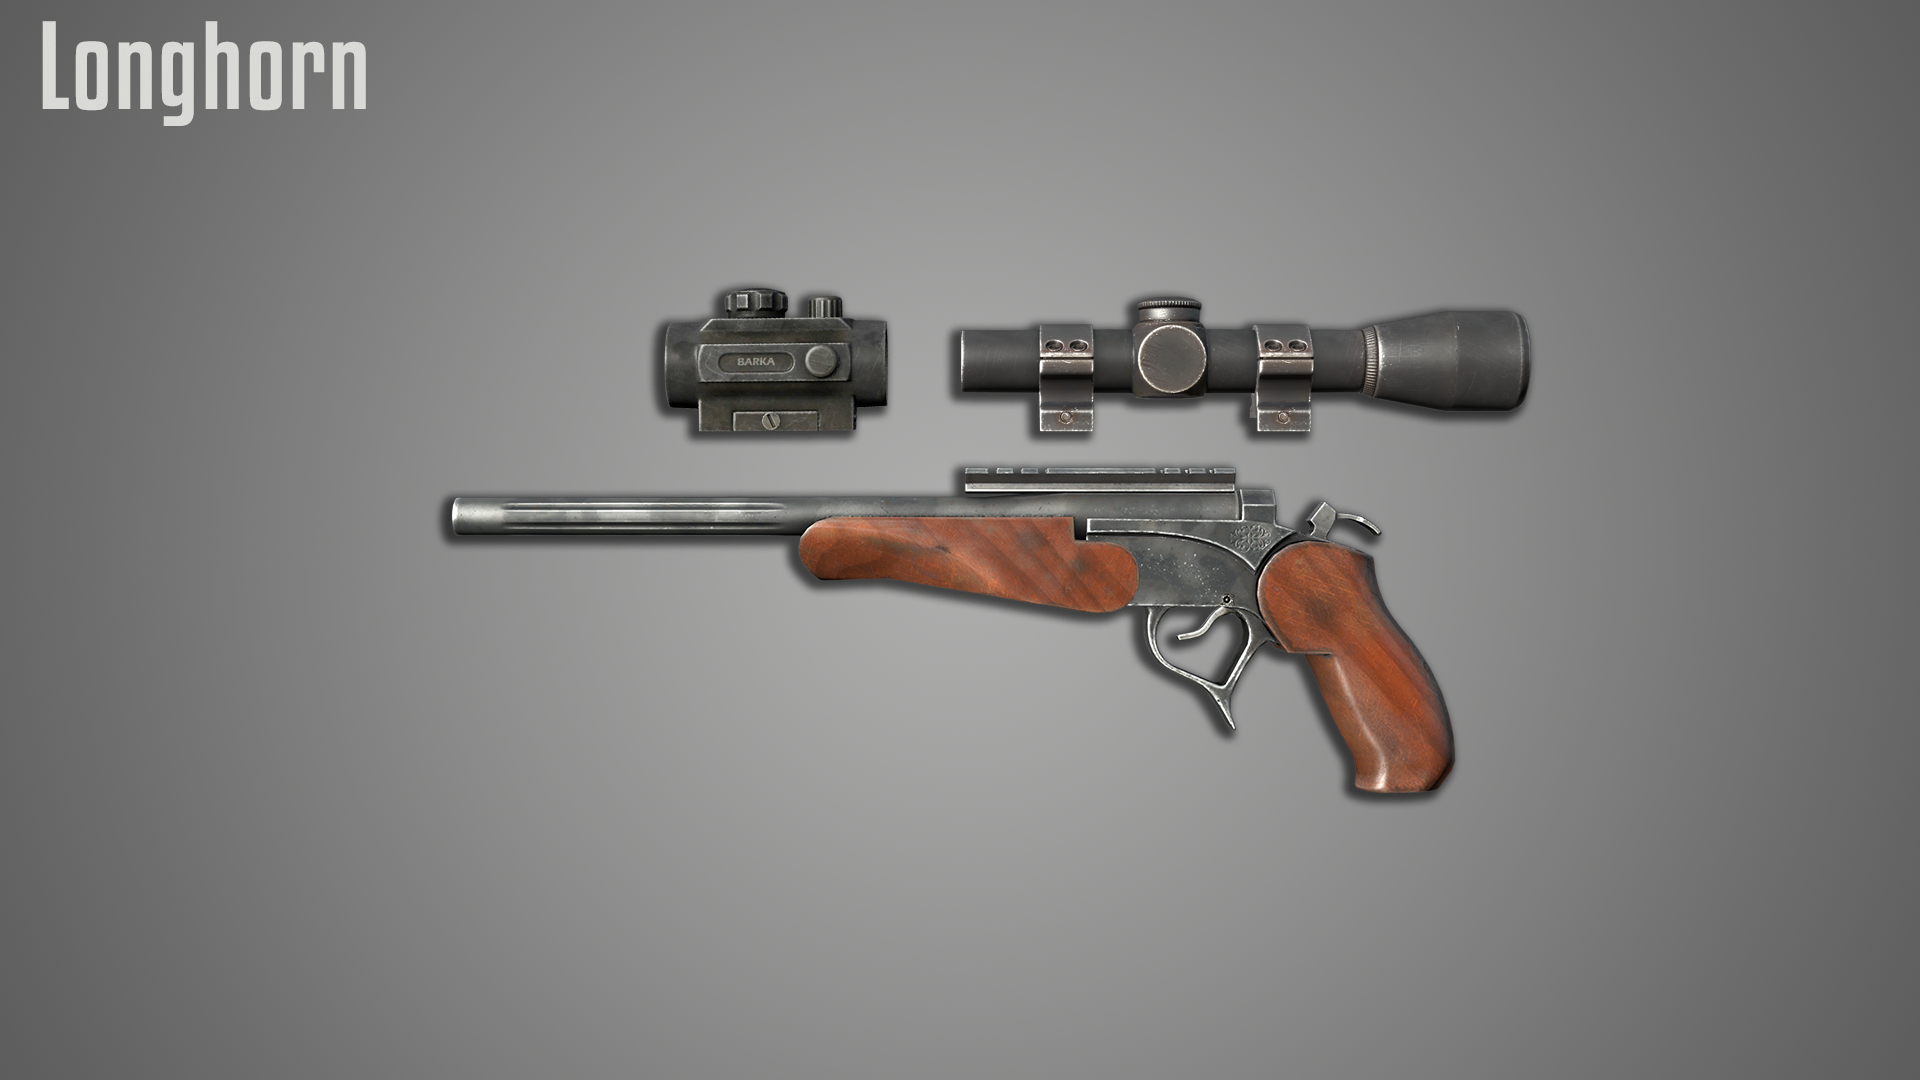 General 1920x1080 DayZ weapon minimalism bullet video games side view simple background gun scopes video game art pistol